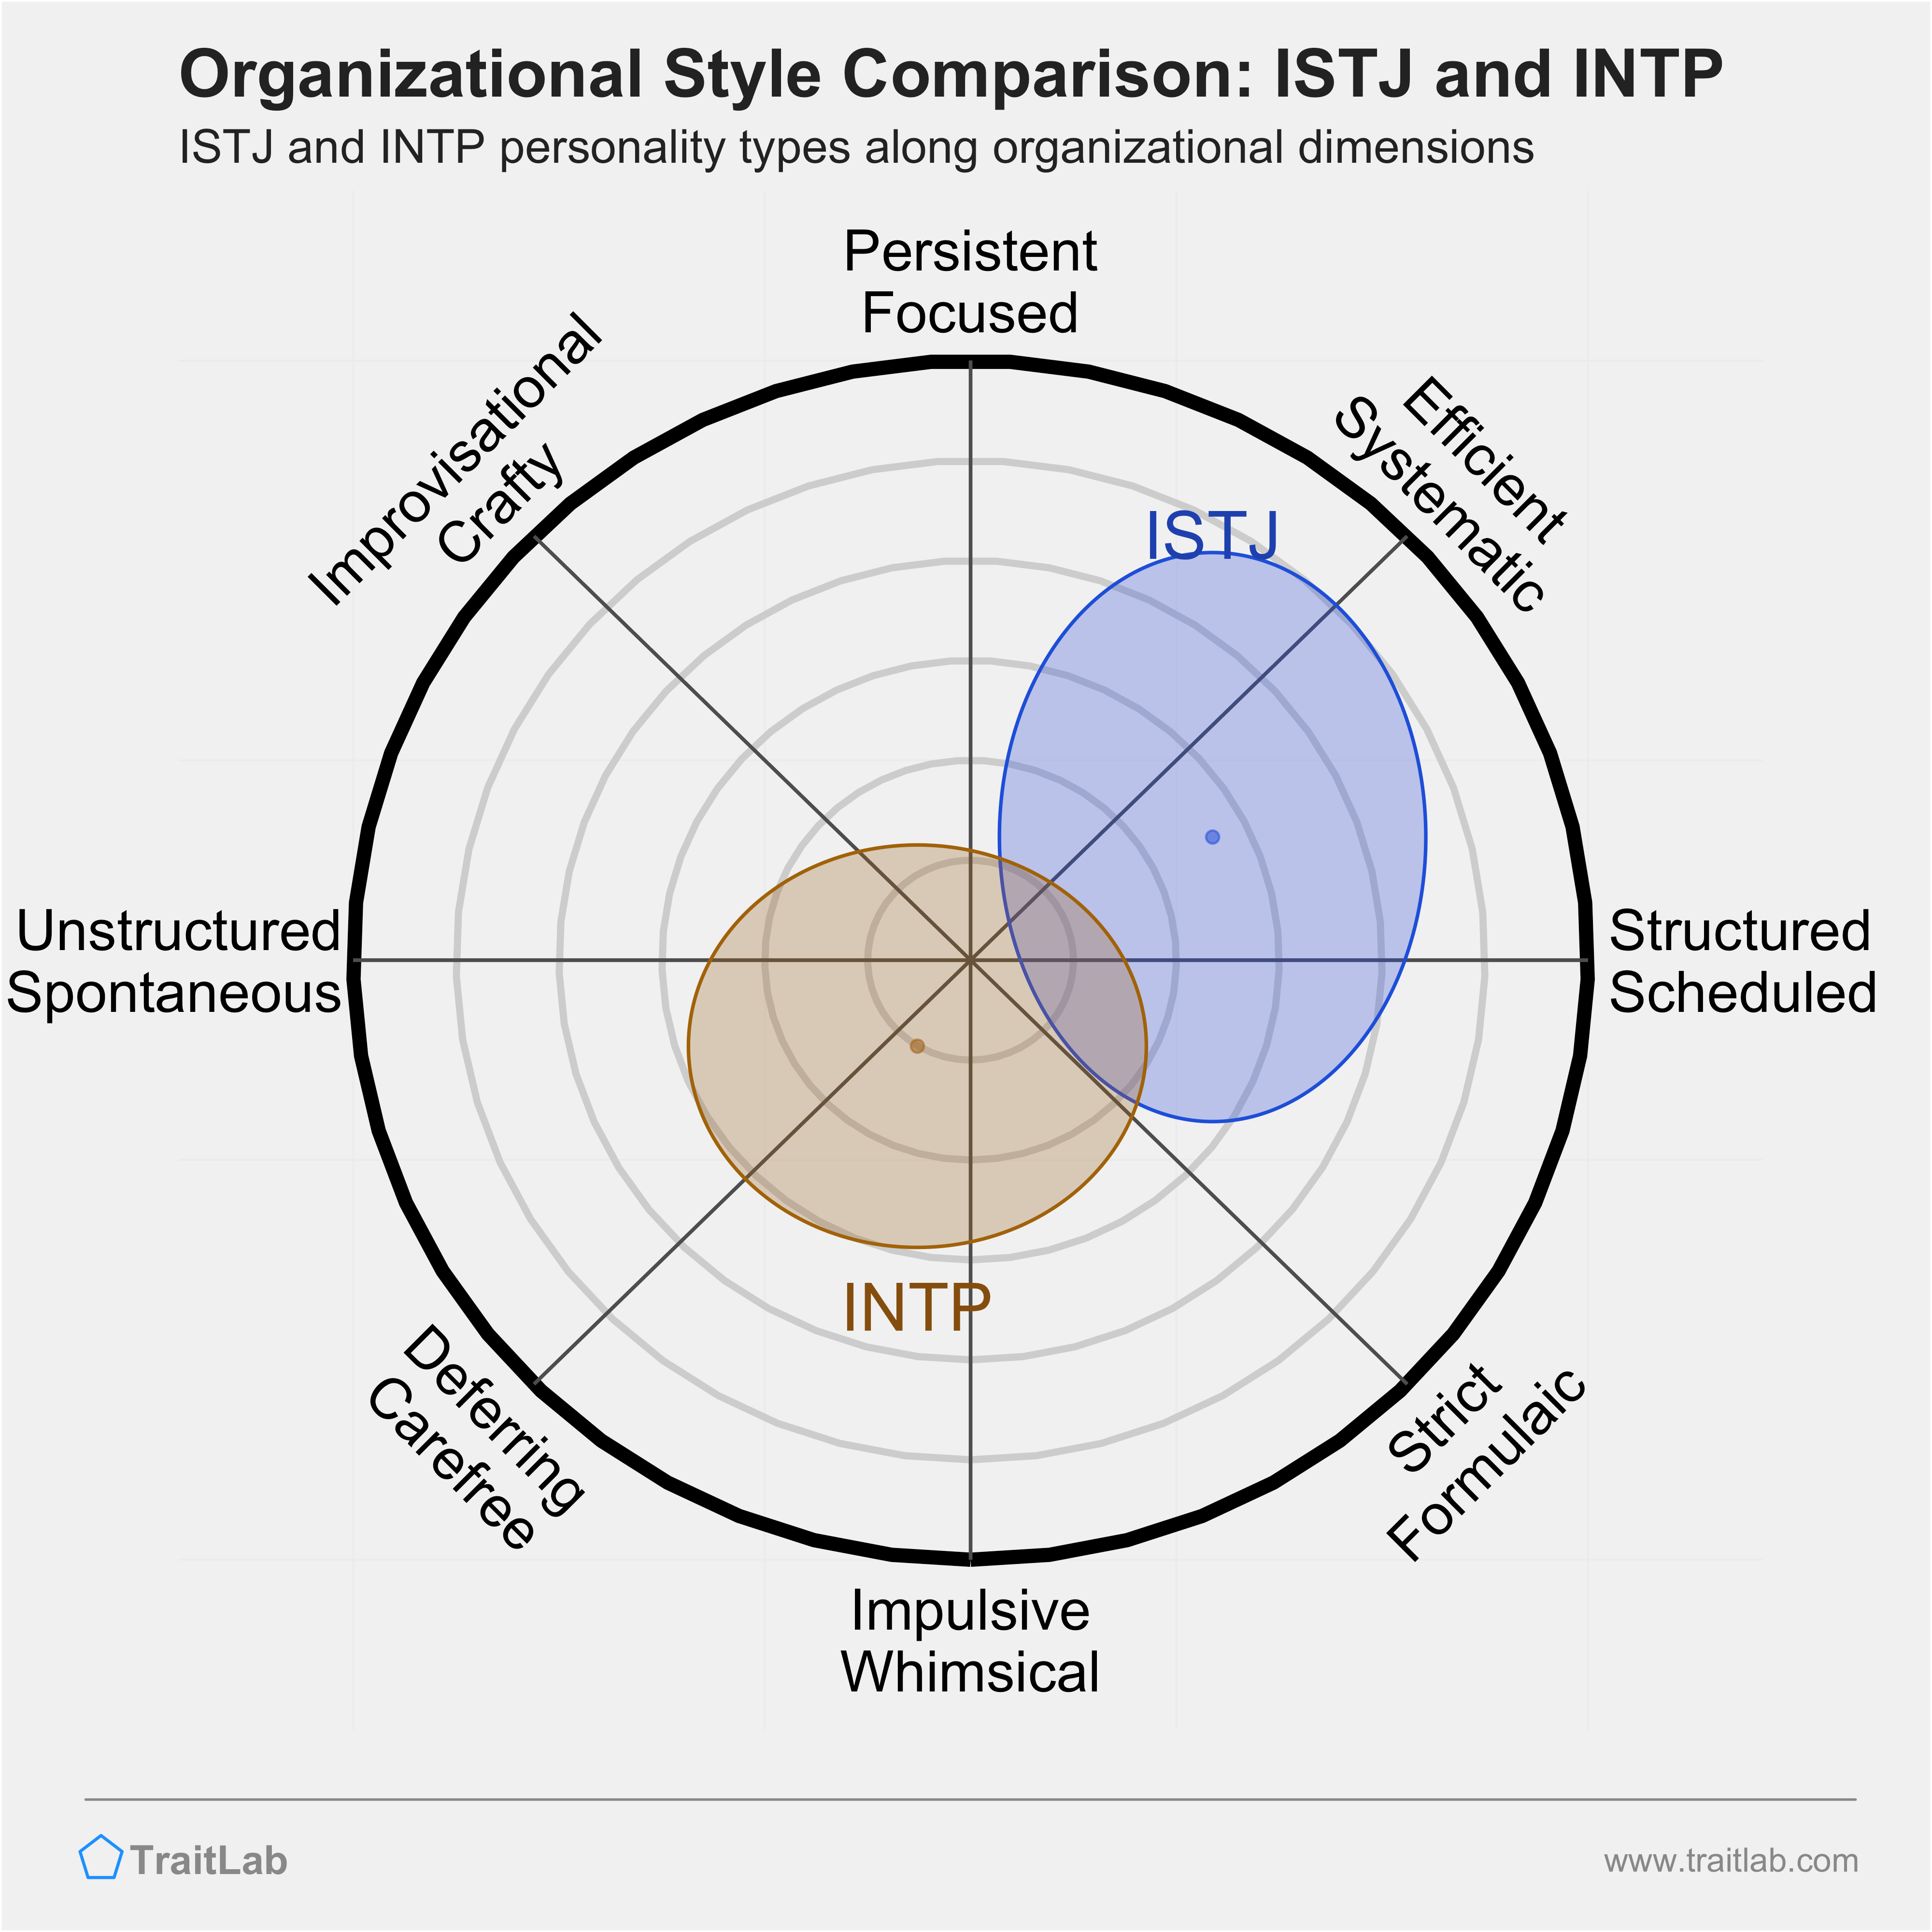 ISTJ and INTP comparison across organizational dimensions